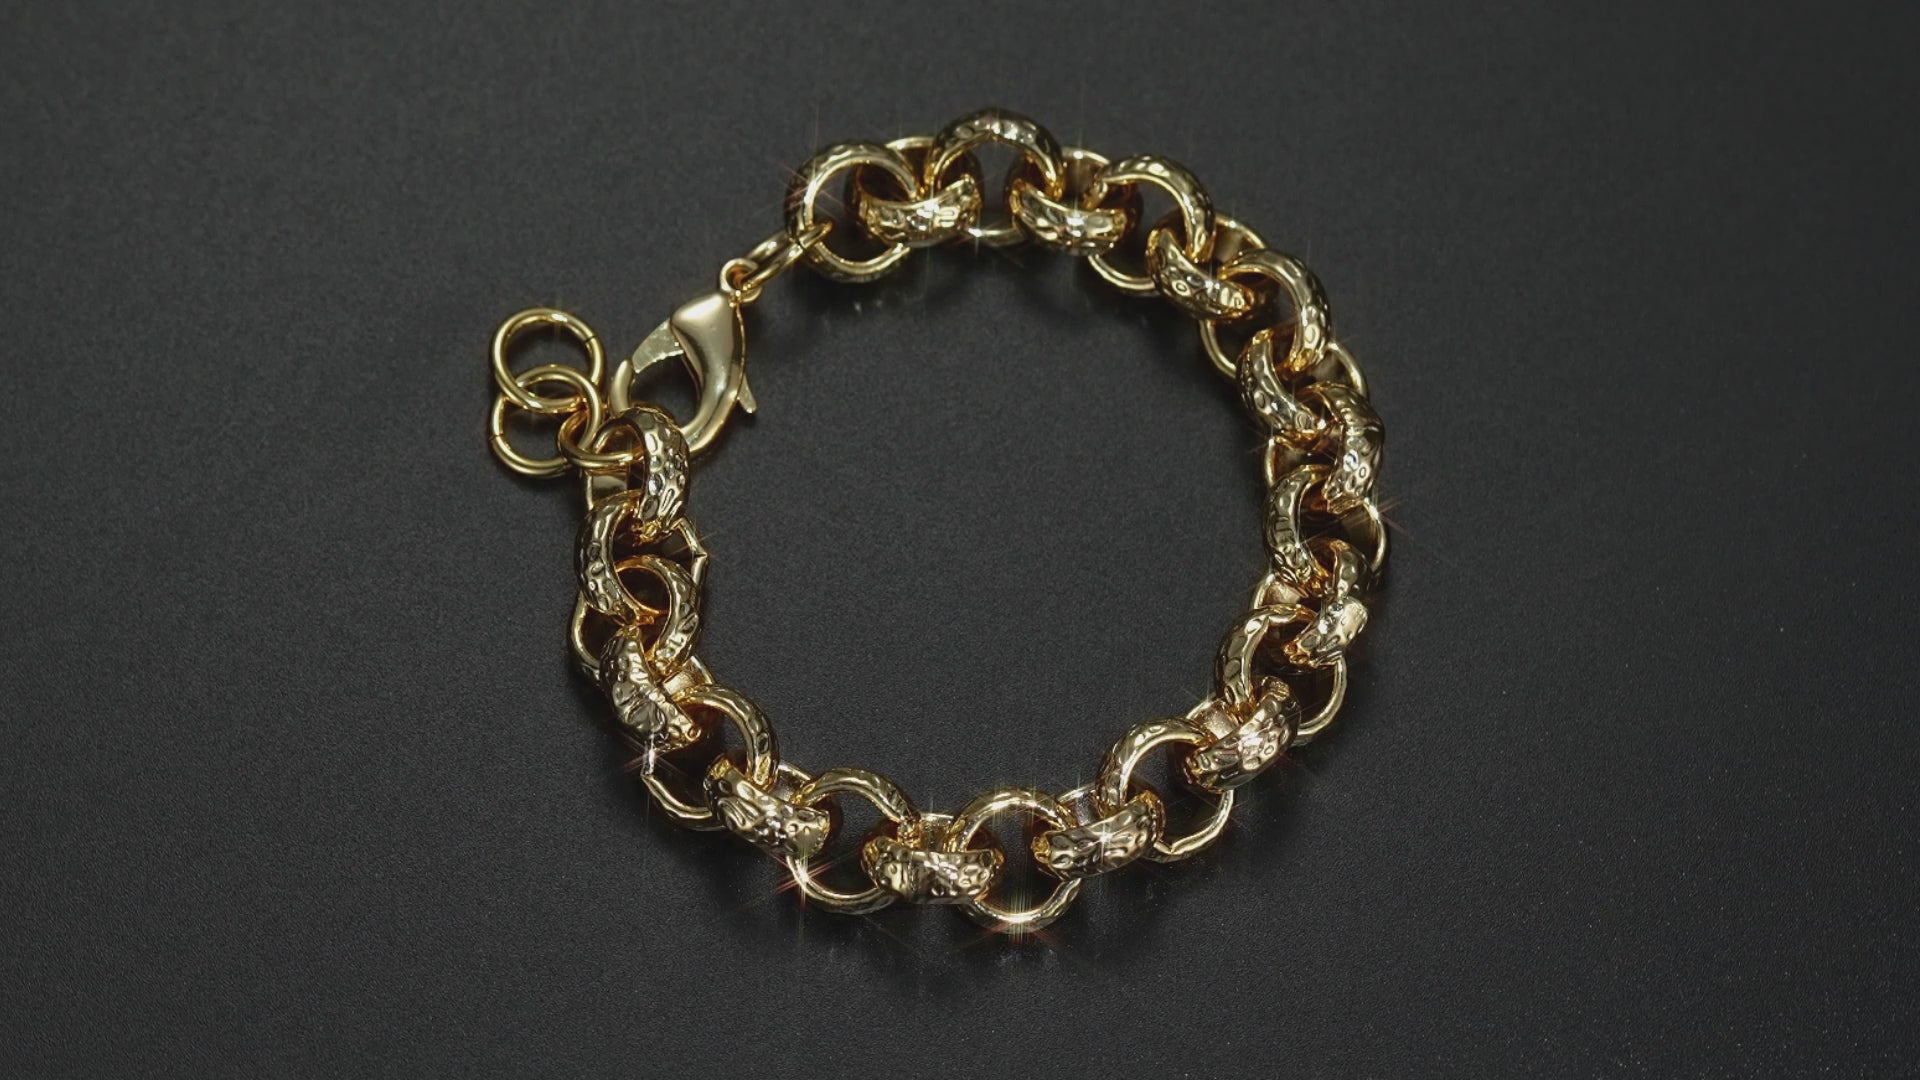 Luxury Gold 12mm Diamond Cut Pattern Belcher Chain and Bracelet Set (24 &amp; 8 Inches)